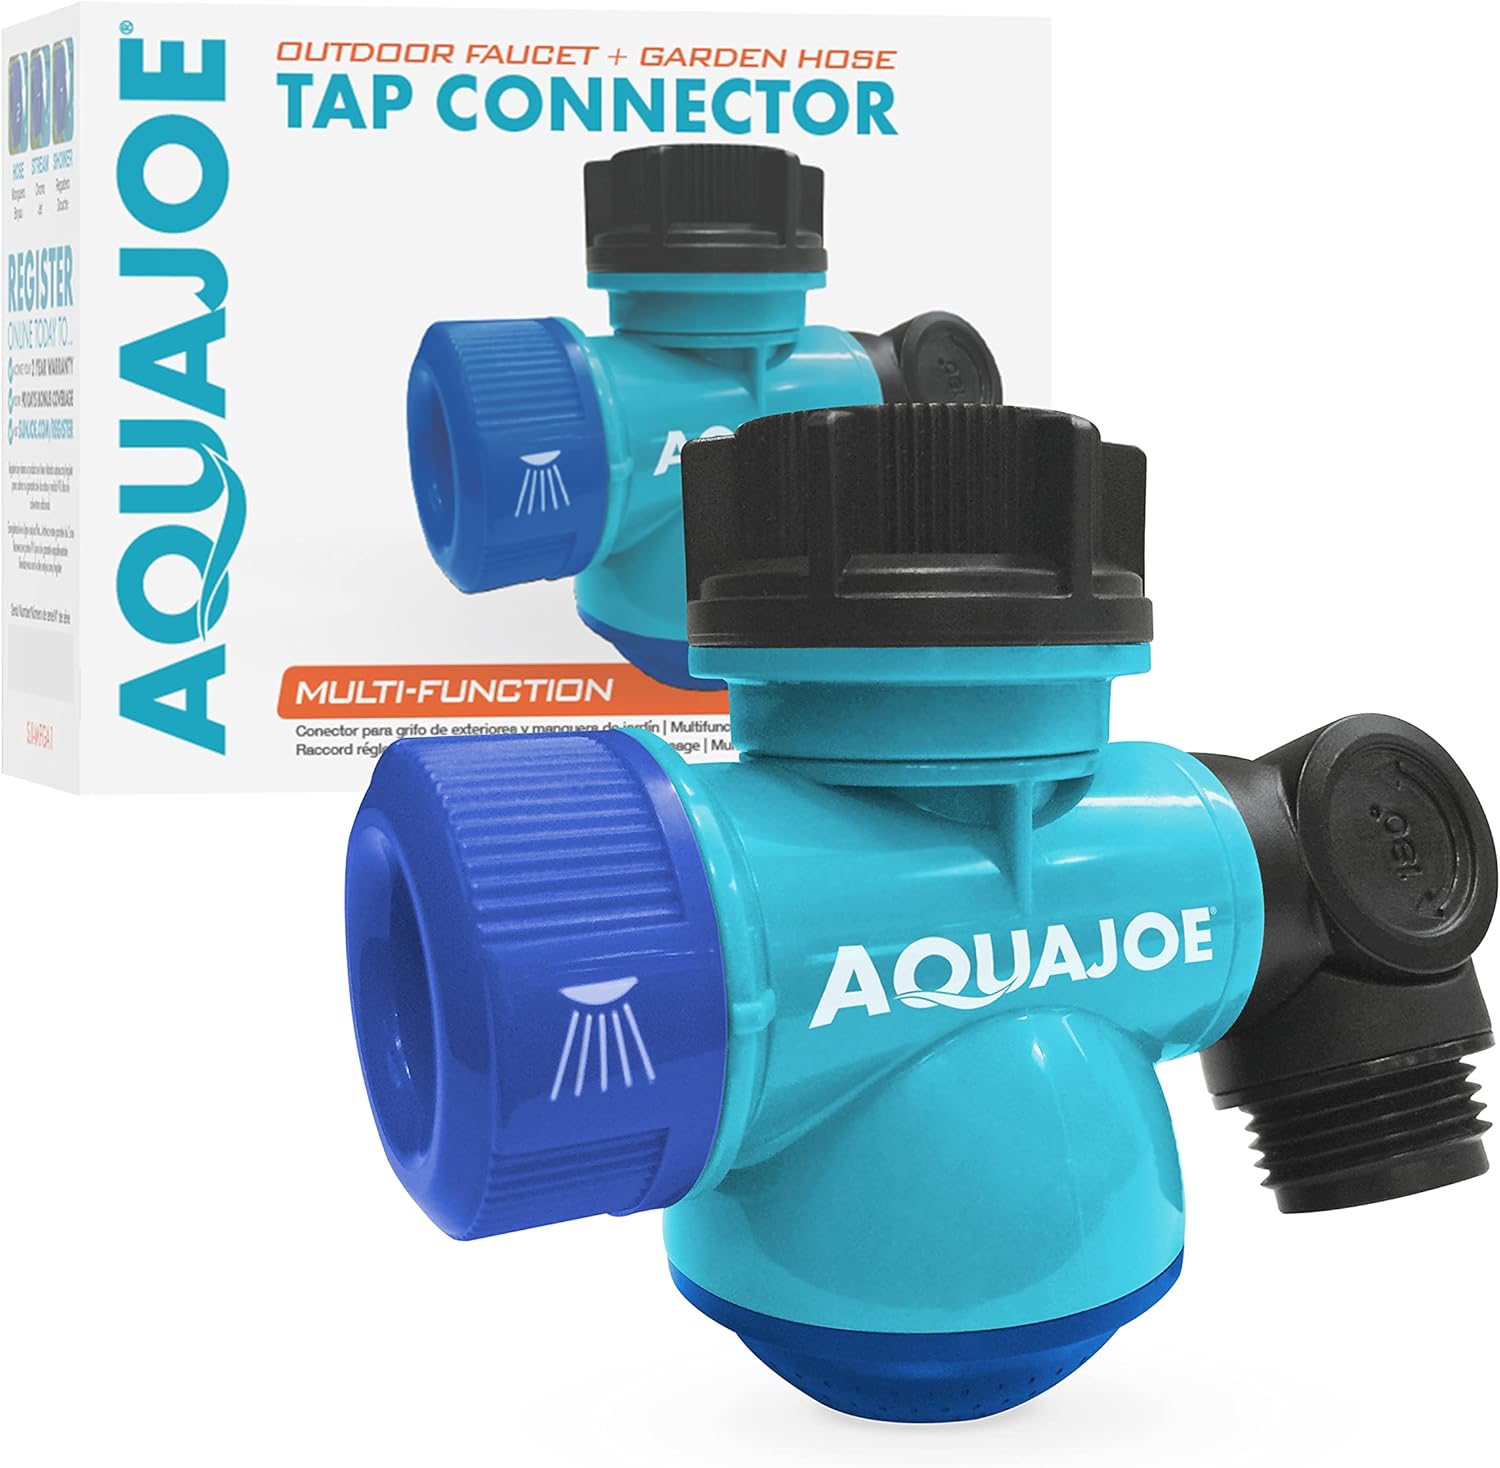 amazon has Aqua Joe SJI-MFGA1 Multi-Function Outdoor Faucet and Garden Hose Tap Connector $6.49 lowest price so far $6.47